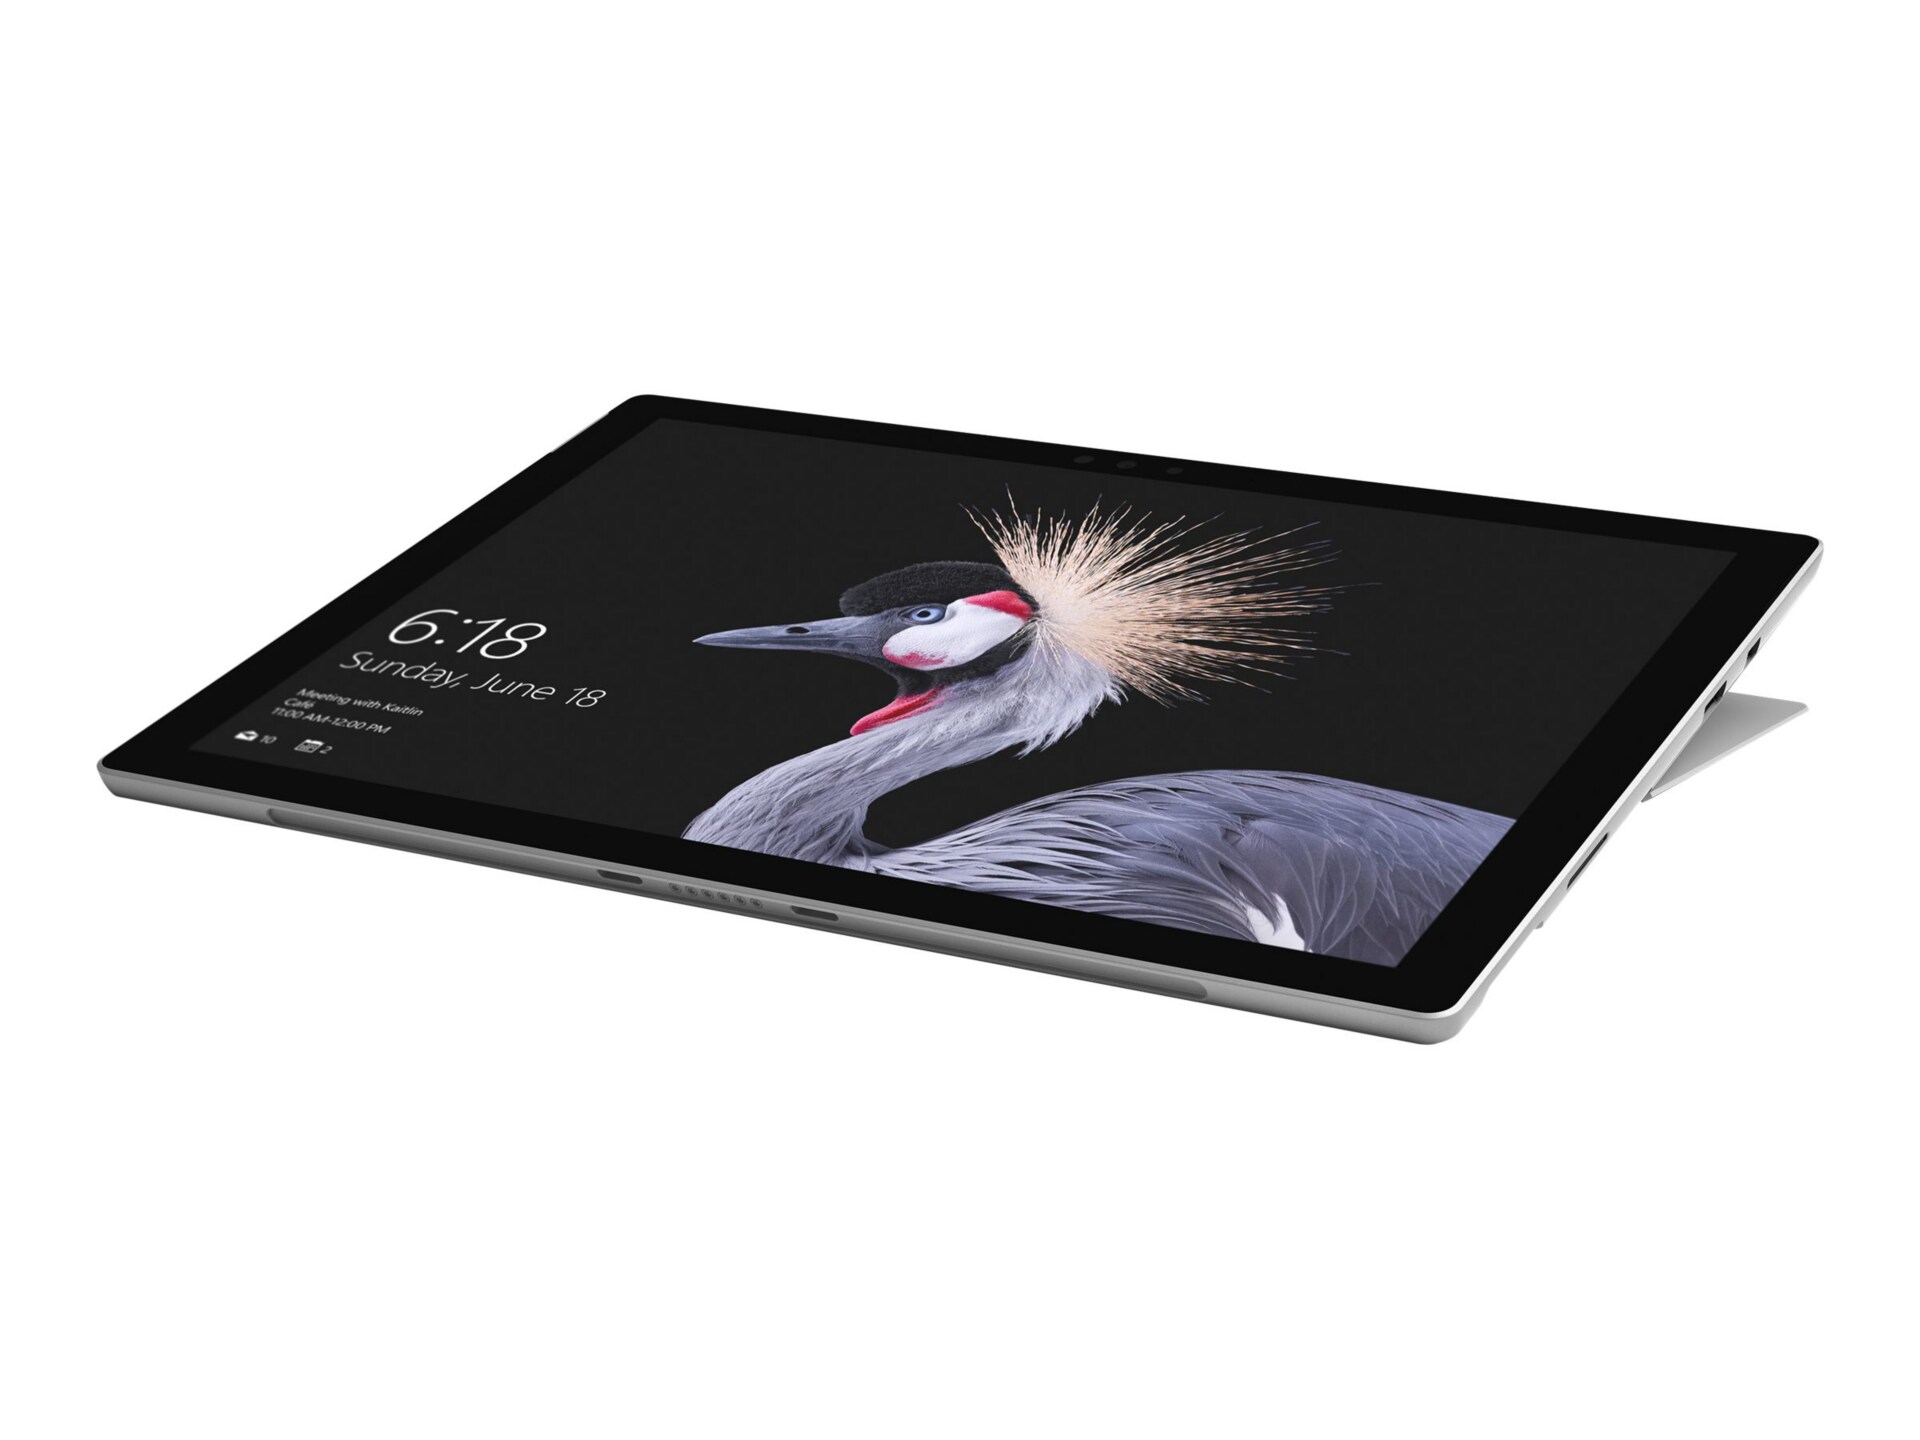 Microsoft Surface Pro - 12.3" - Core m3 7Y30 - 4 GB RAM - 128 GB SSD